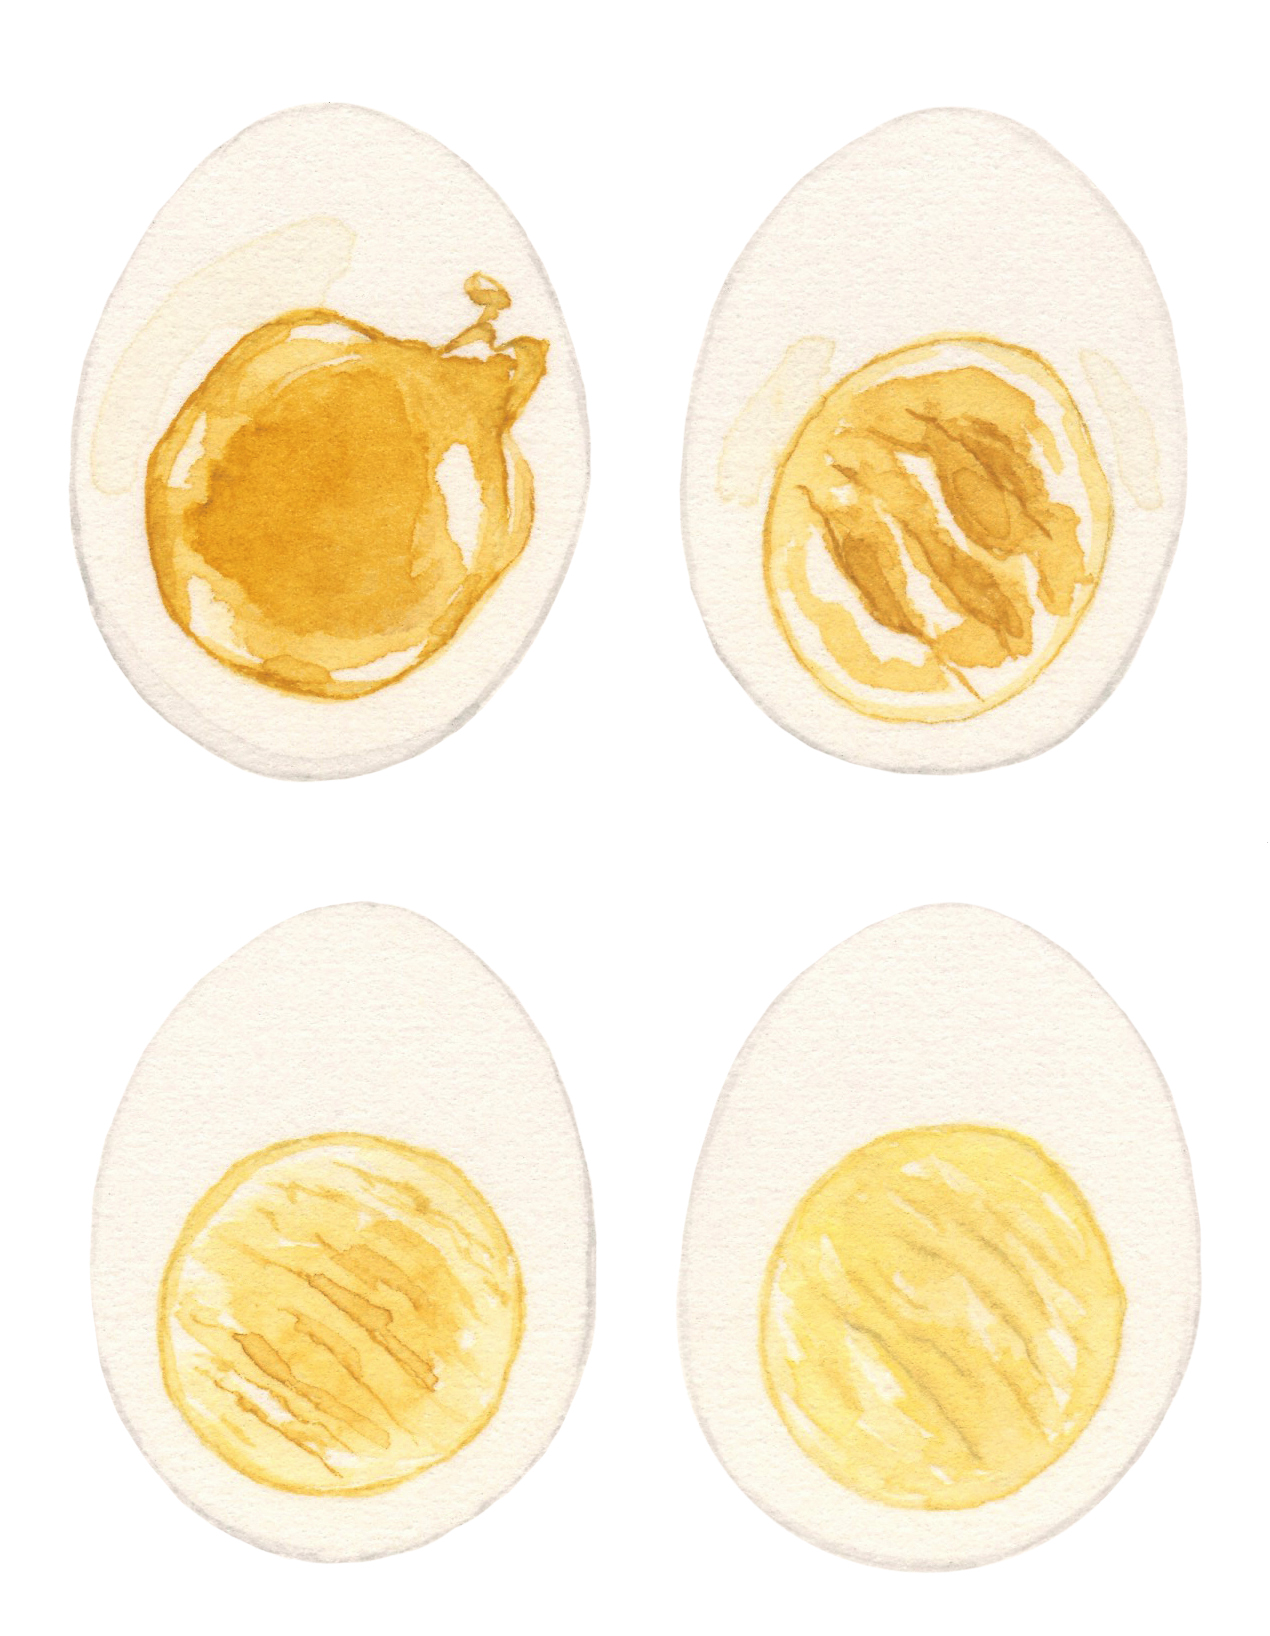 eggs-lrg.jpg